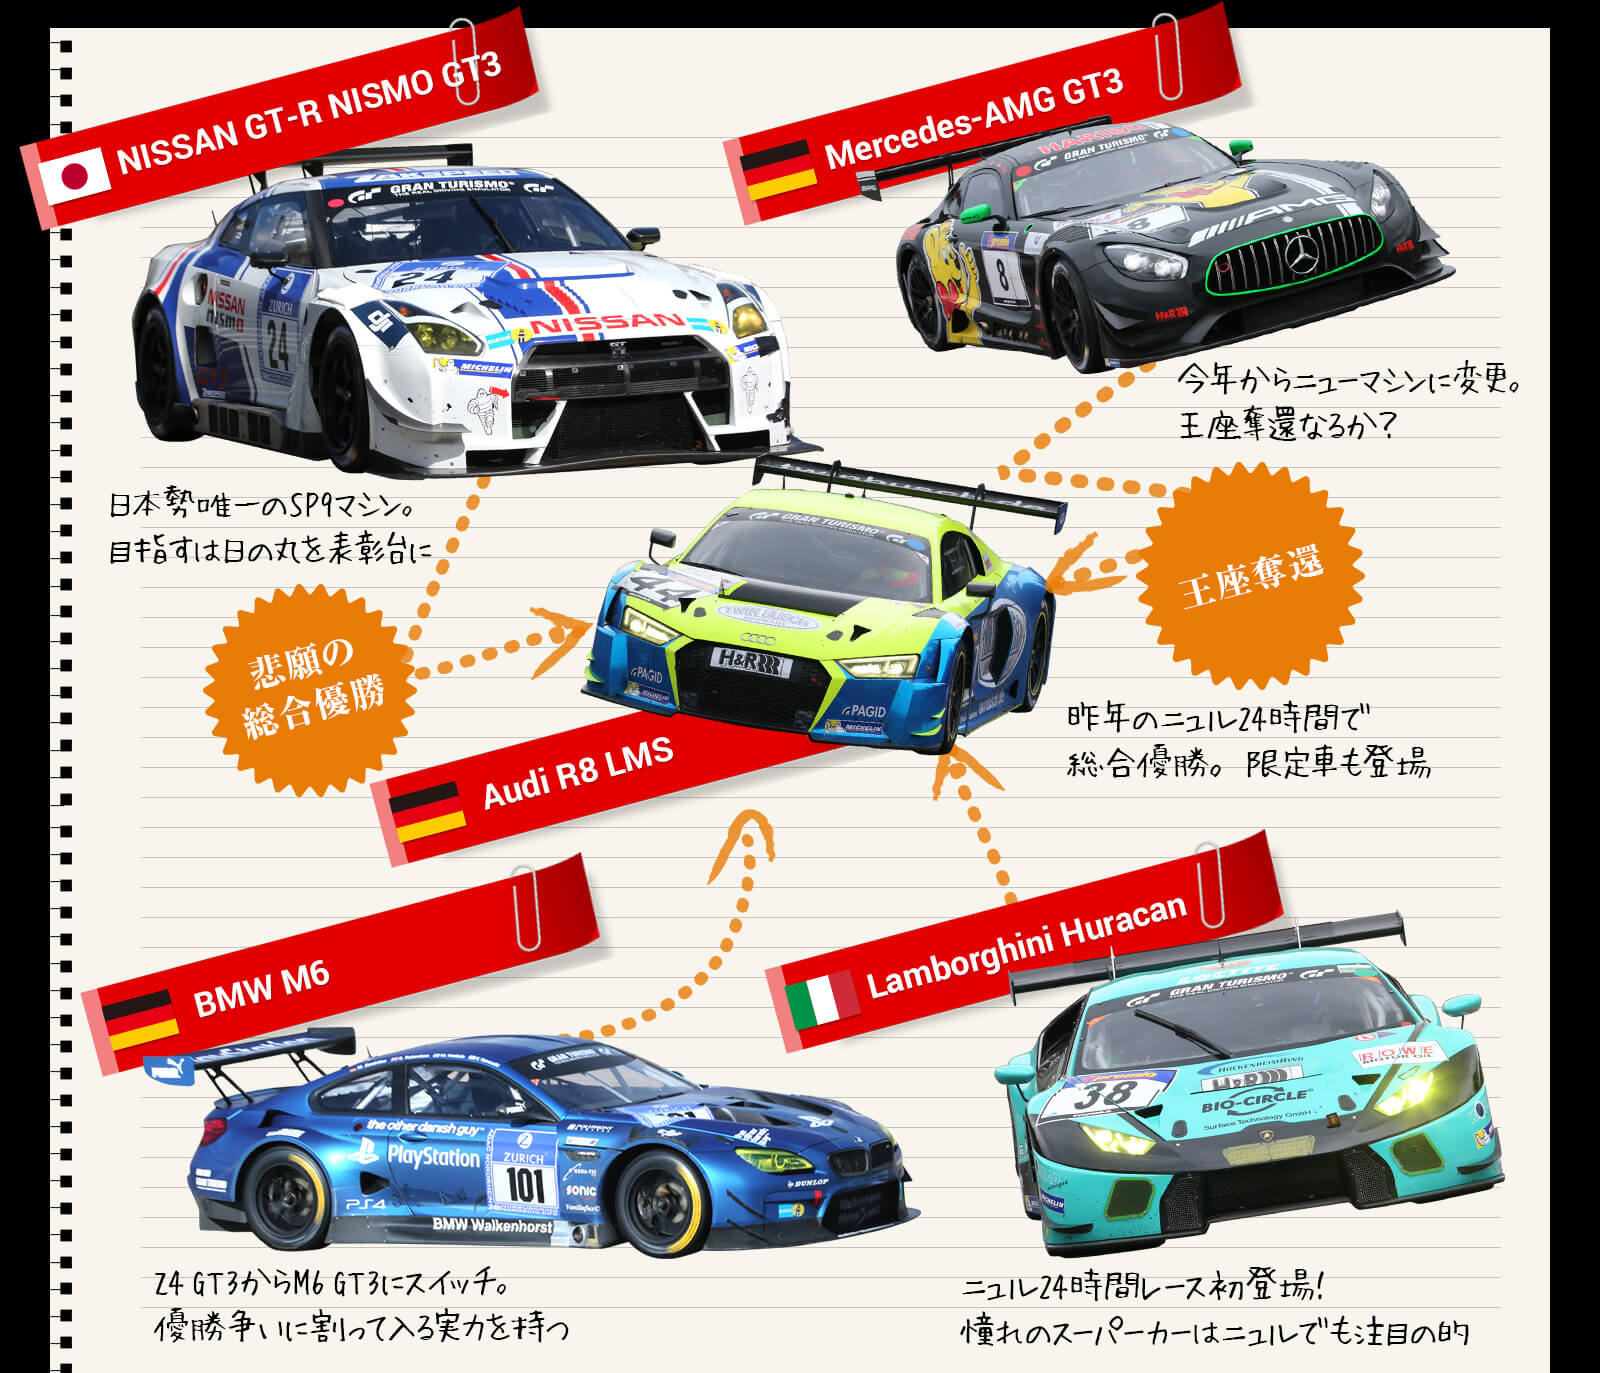 SP9-GT3/NISSAN GT-R NISMO GT3,Mercedes-AMG GT3,Audi R8 LMS,BMW M6,Lamborghini Huracan